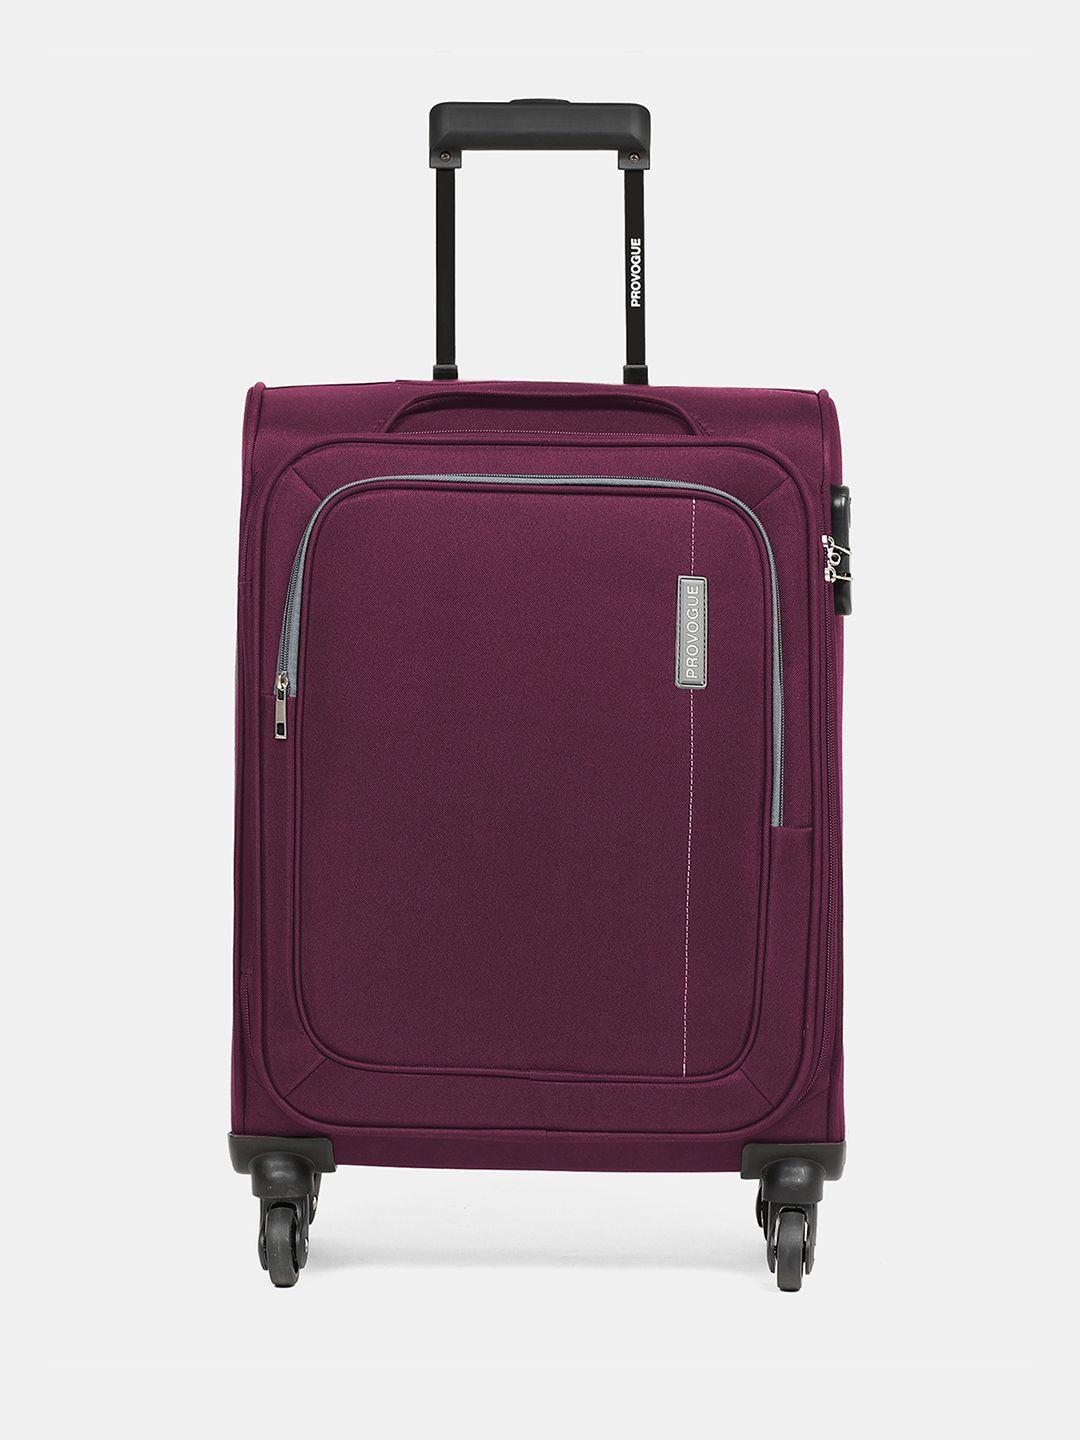 provogue unisex cabin trolley suitcase